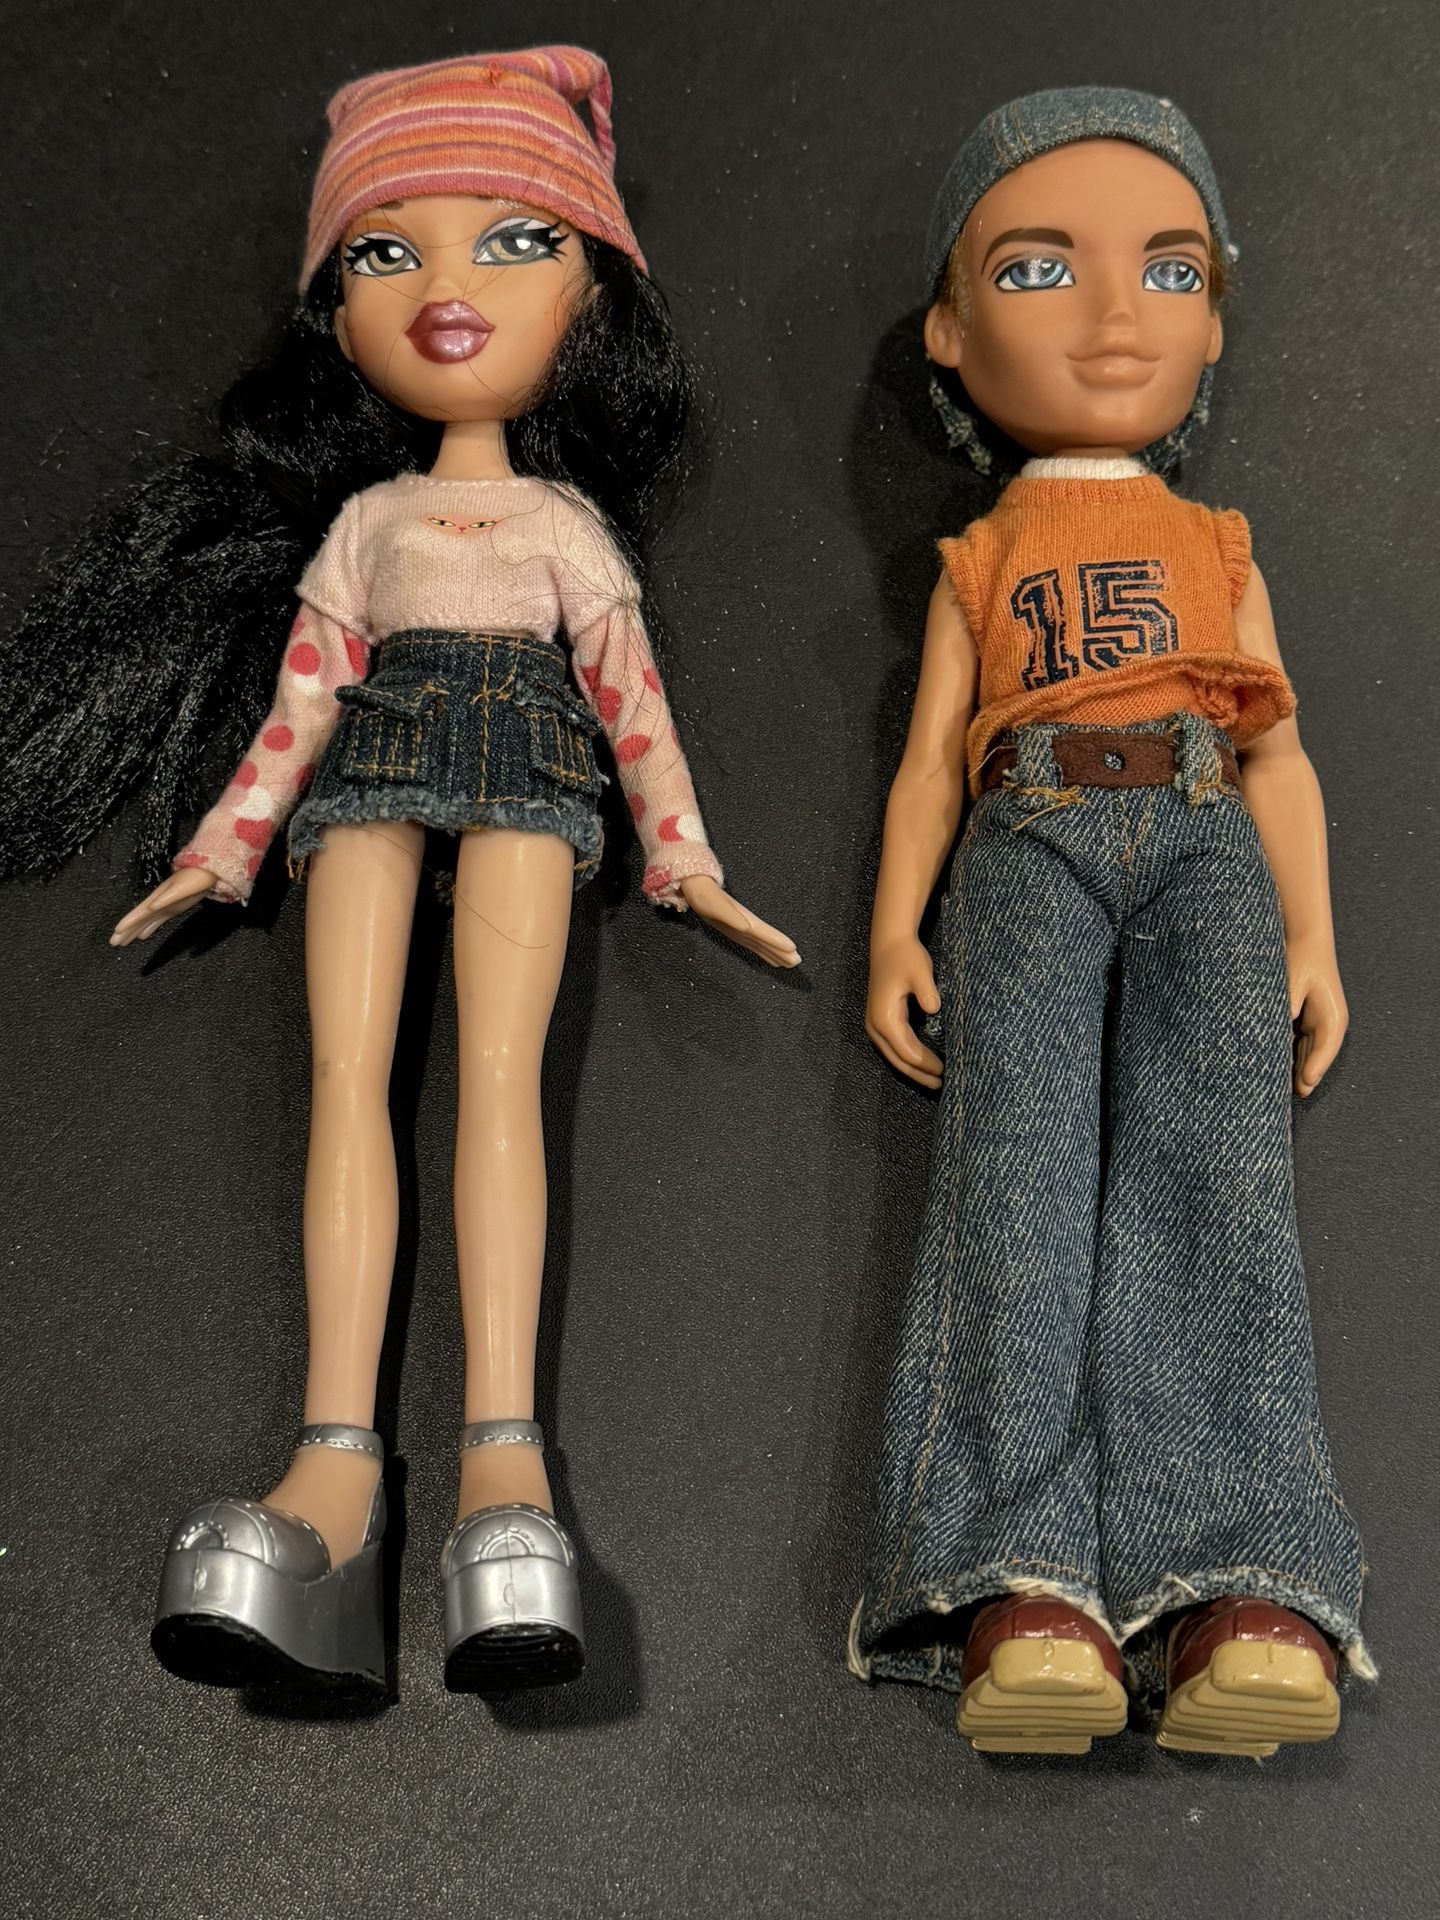 2002 Bratz Boyz Doll - CAMERON & 2001 Bratz Jade Doll. Both include clothing as shown.